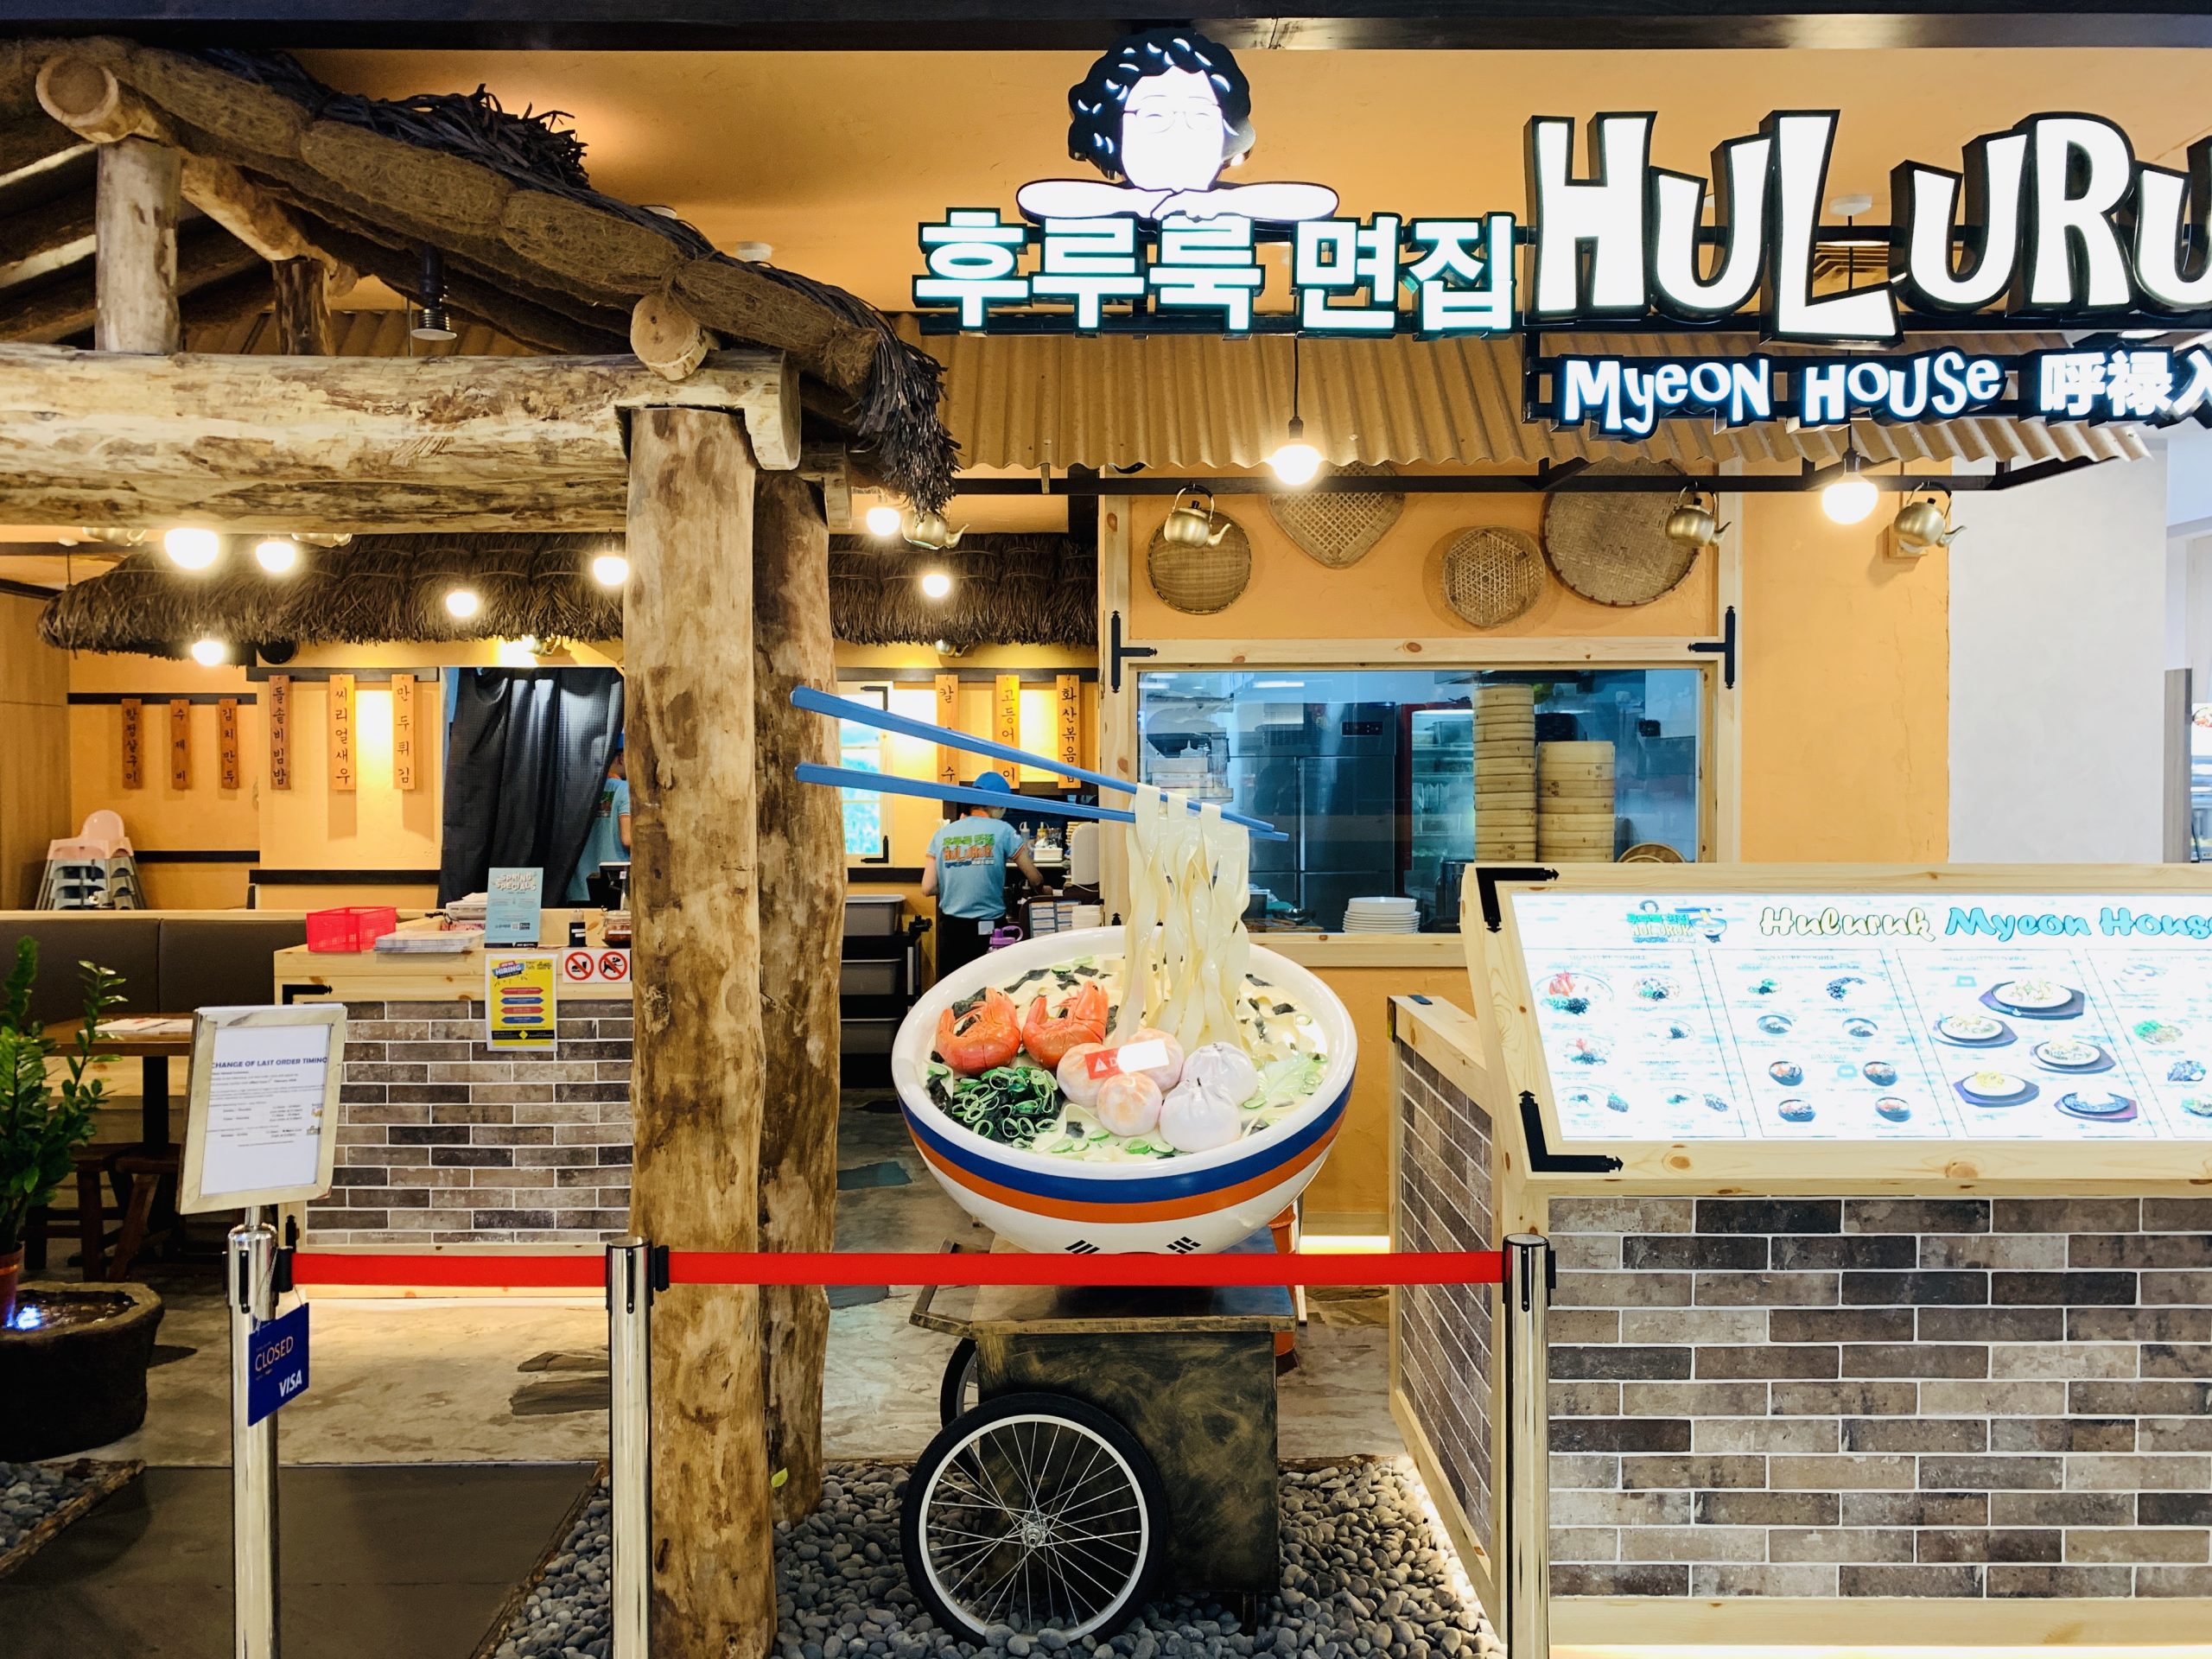 Huluruk Myeon House - Korean Handmade Noodles